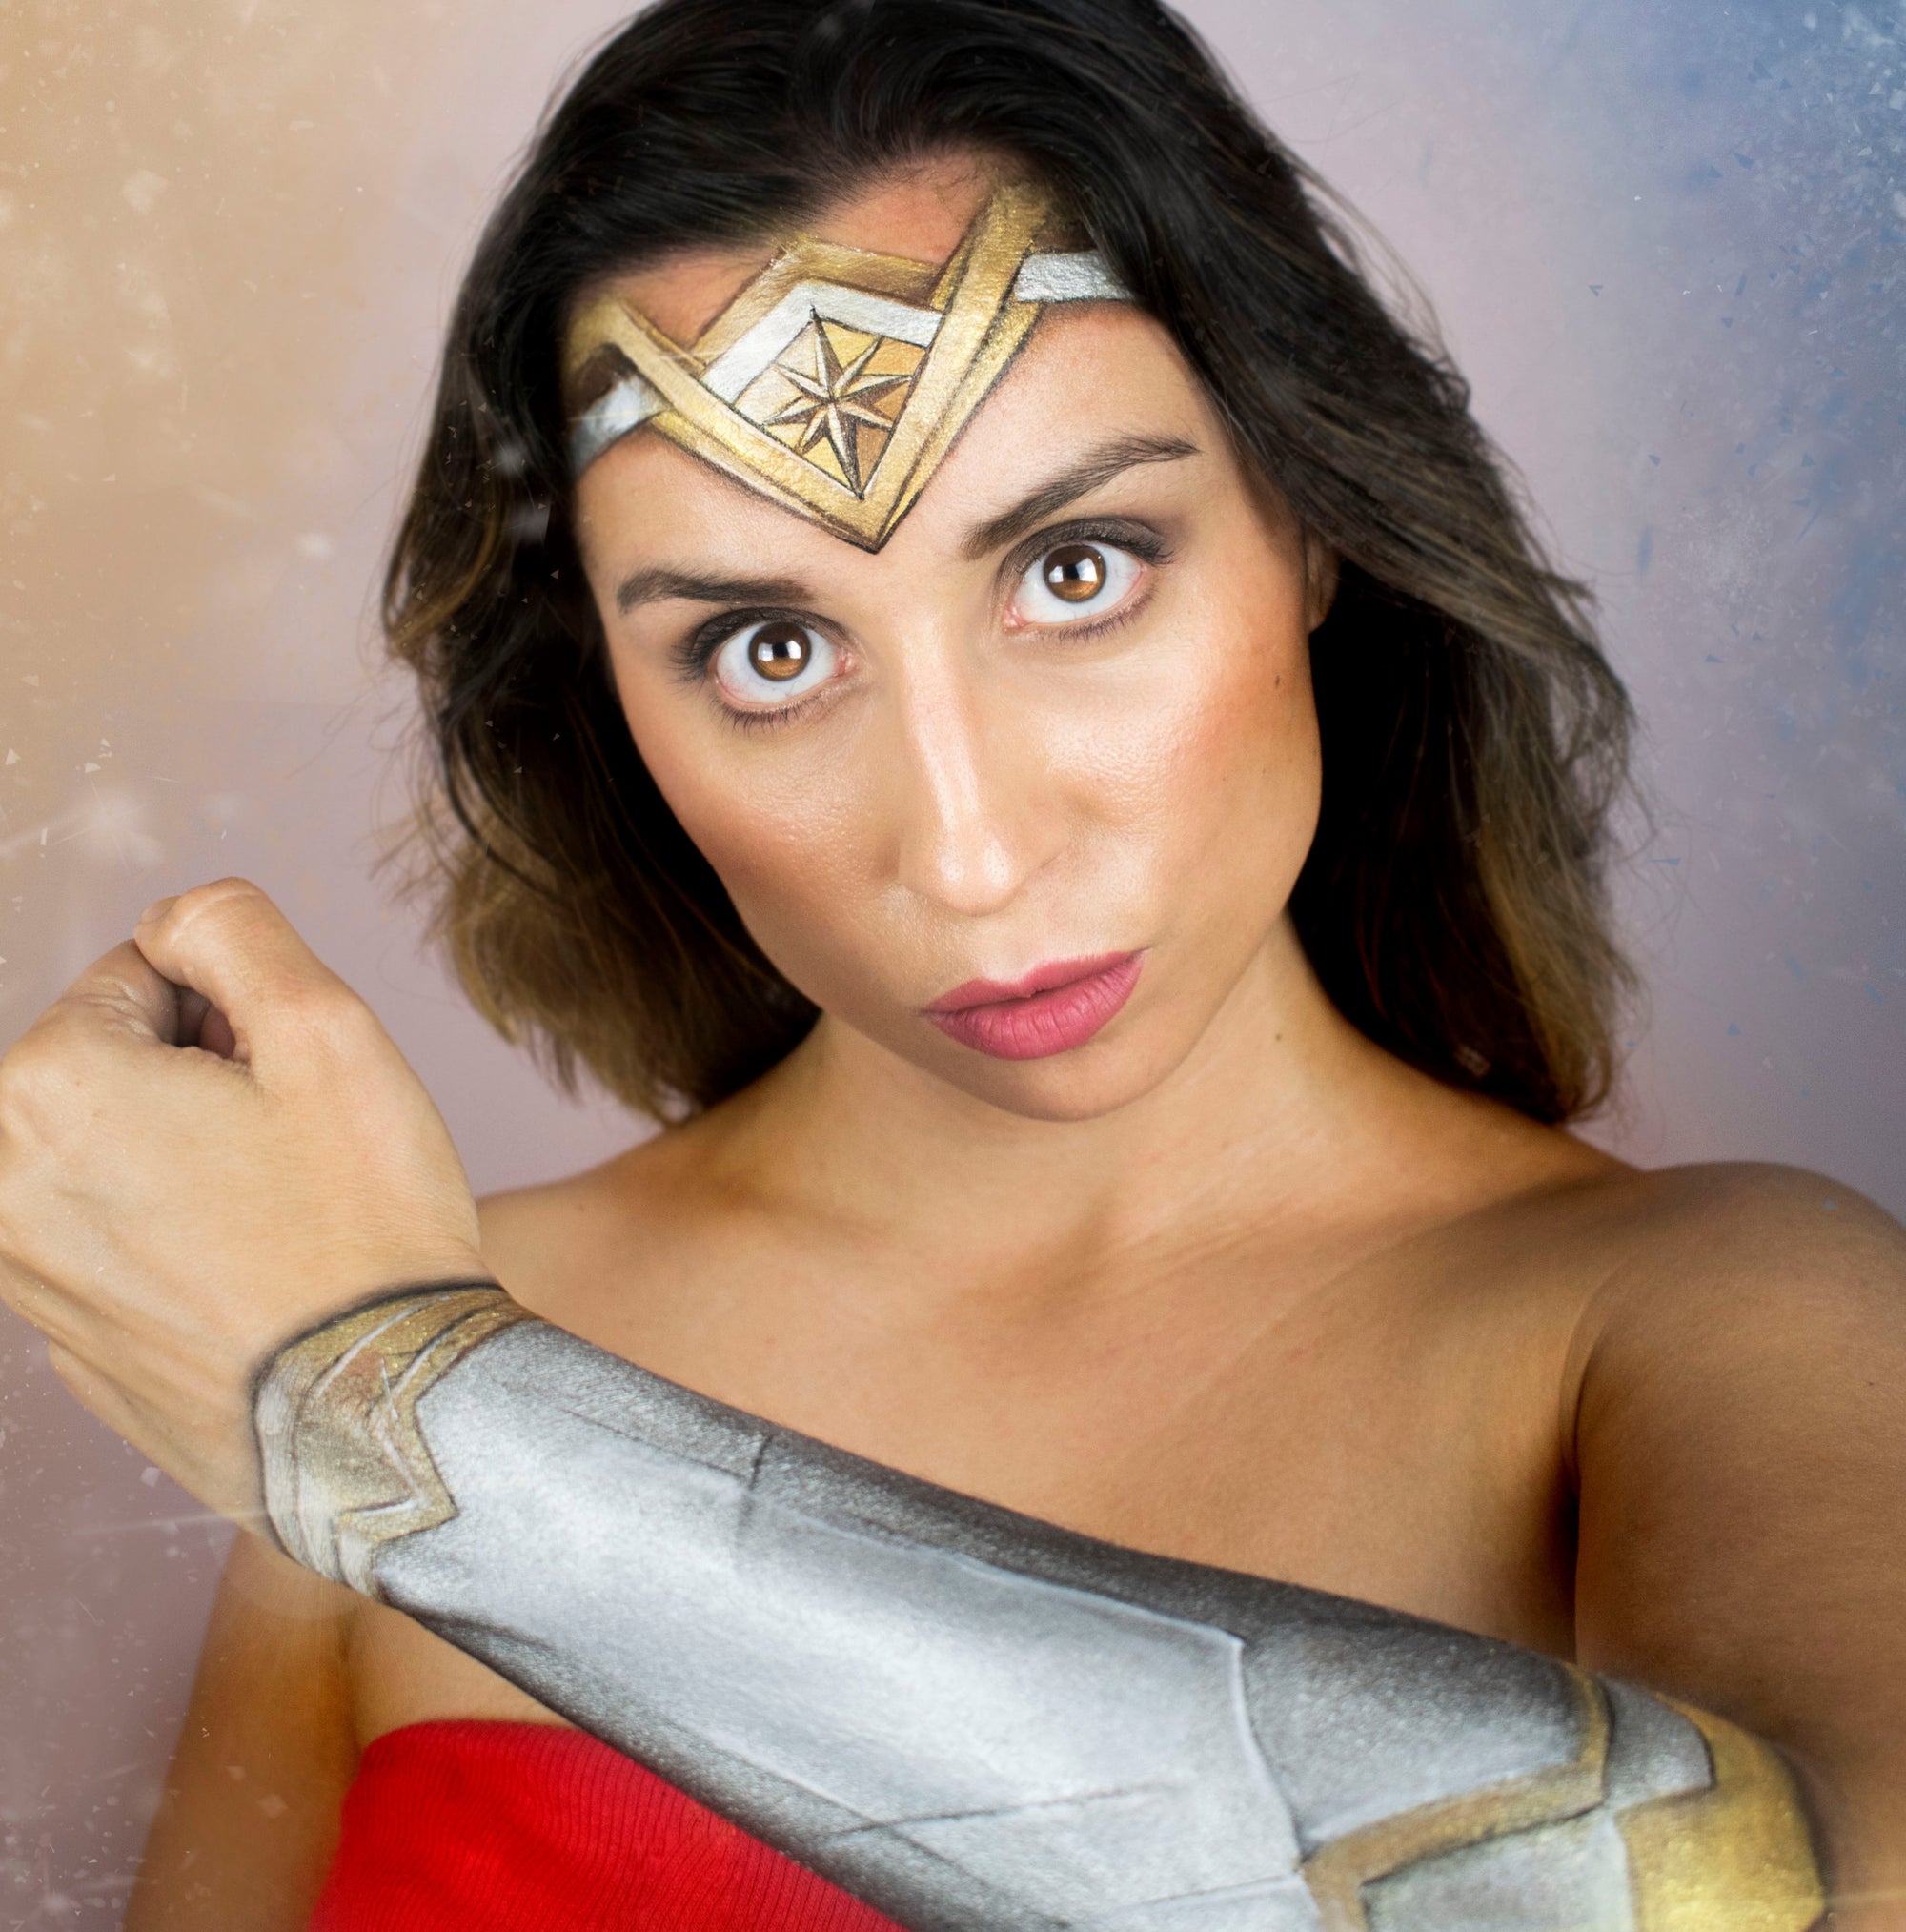 Wonder Woman Face Paint Tutorial: Tiara and Bracelet